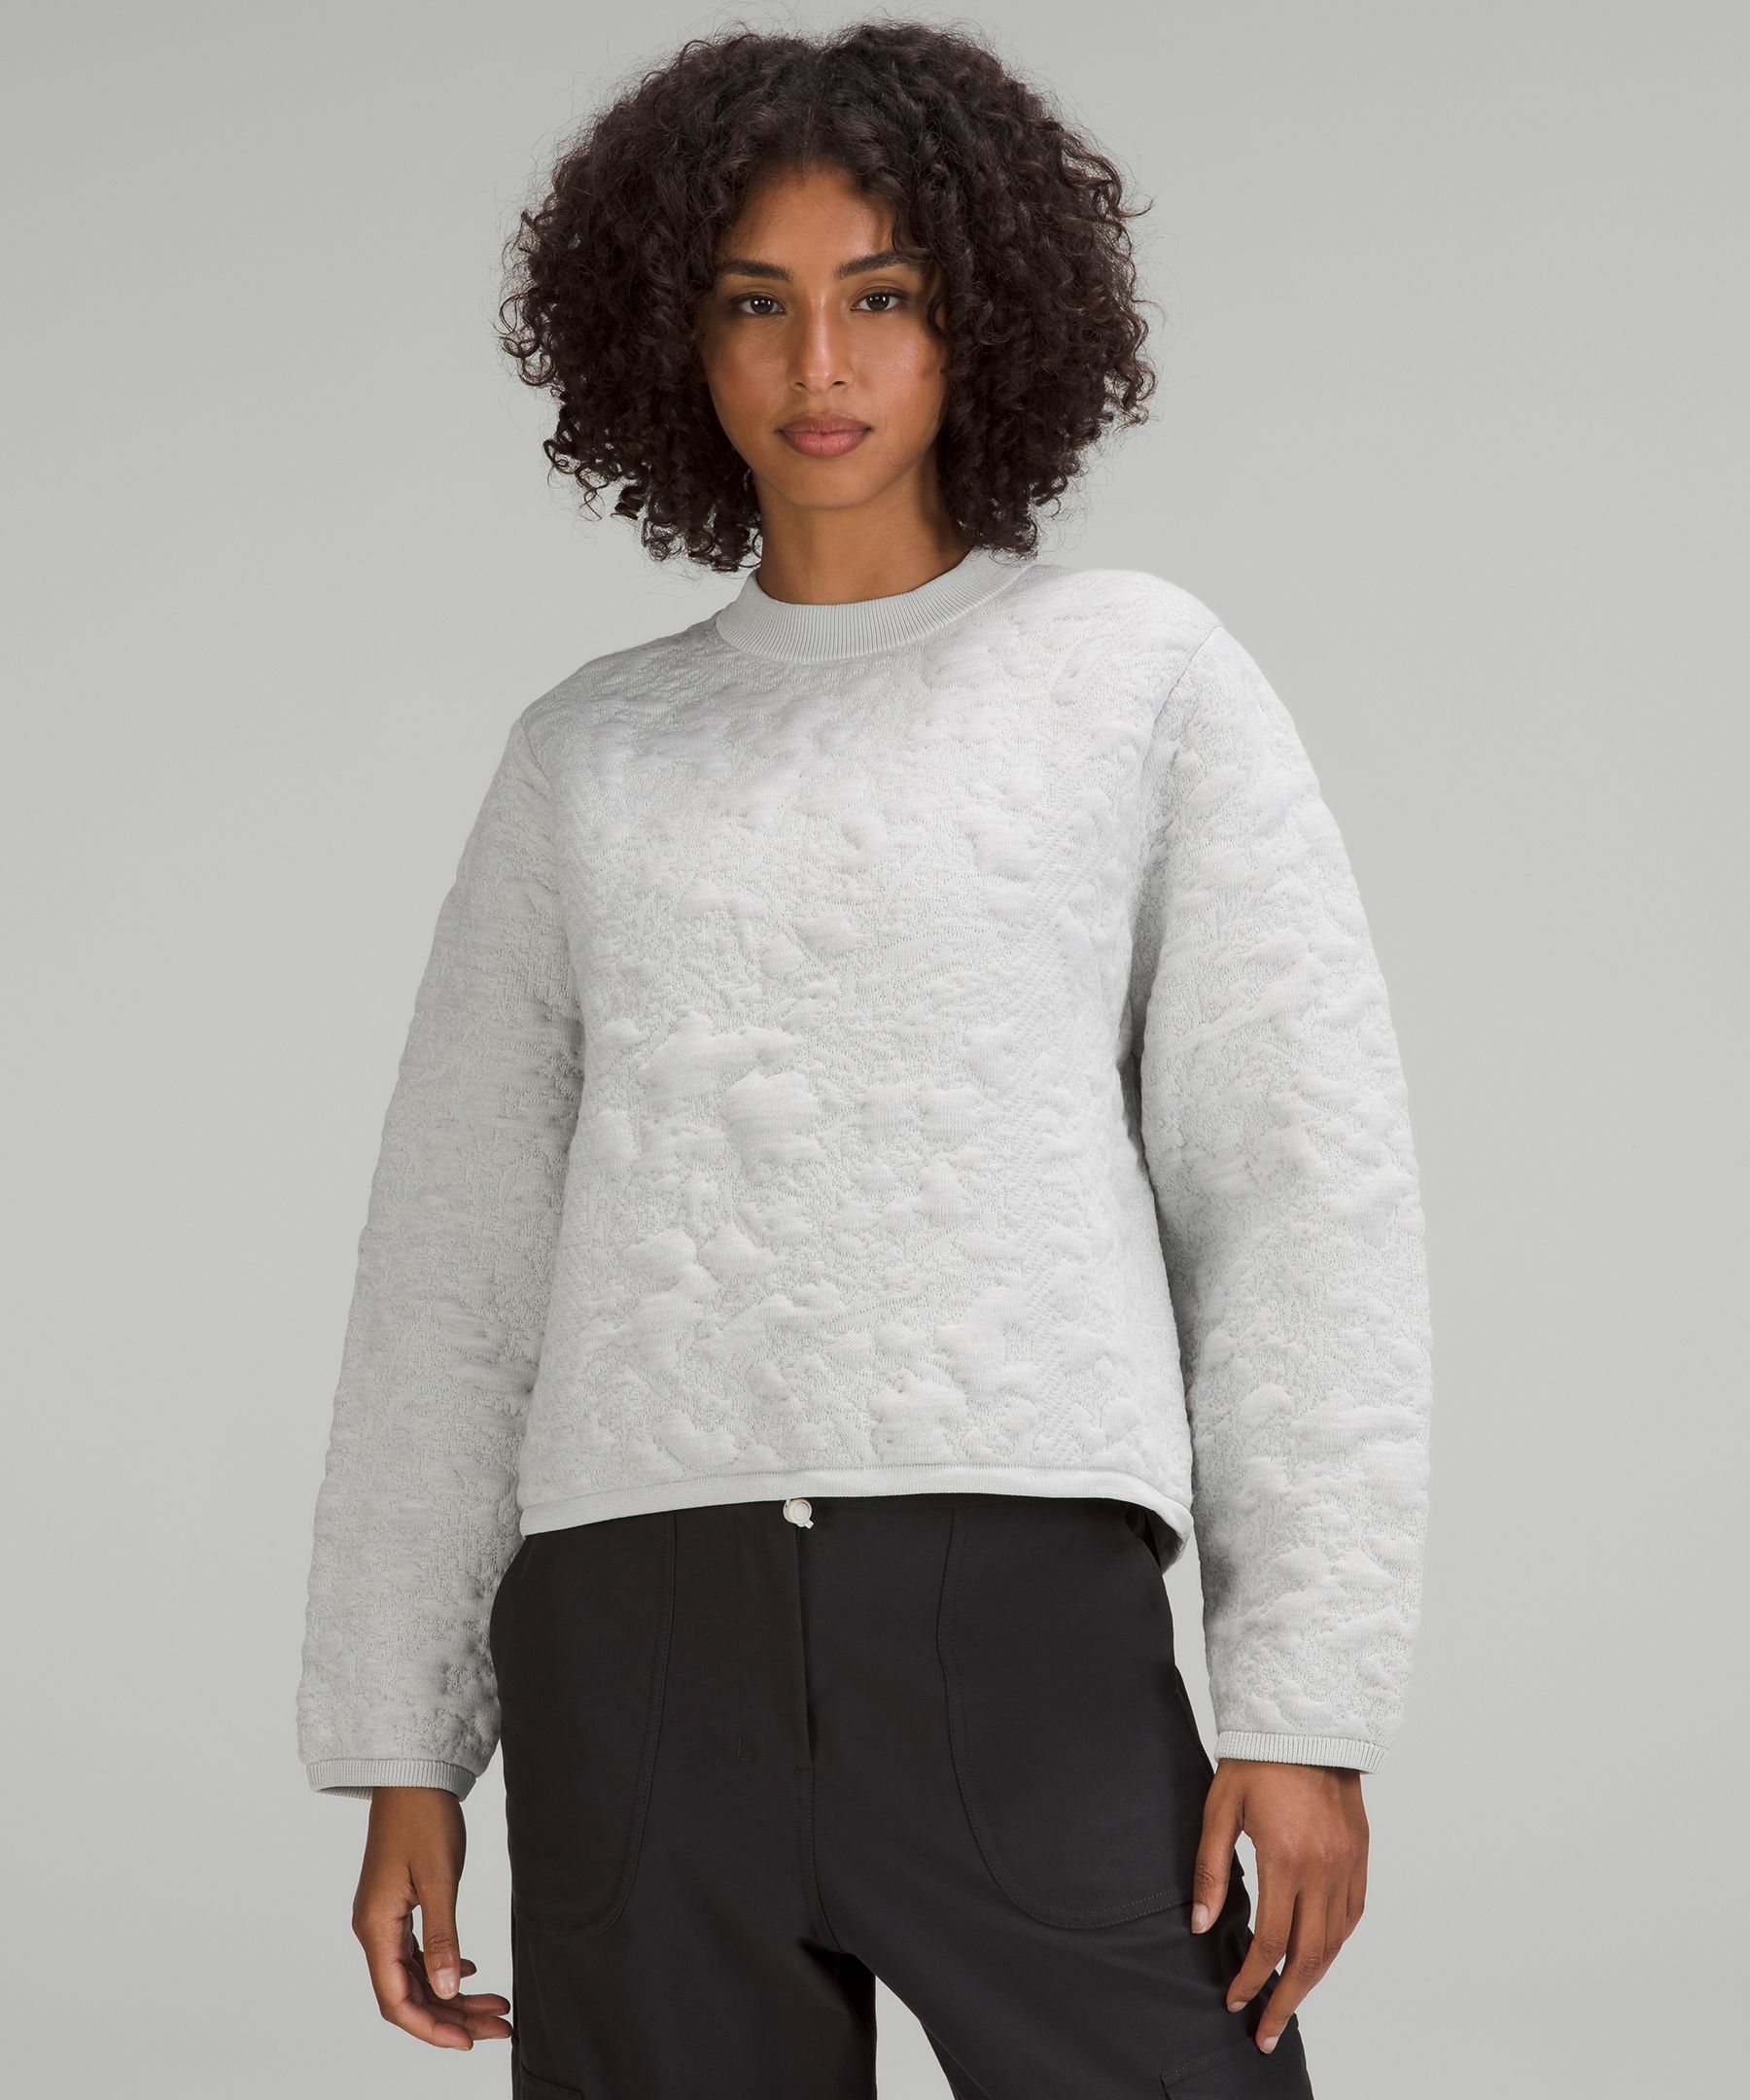 Lululemon Jacquard Multi-texture Crew Neck Sweater